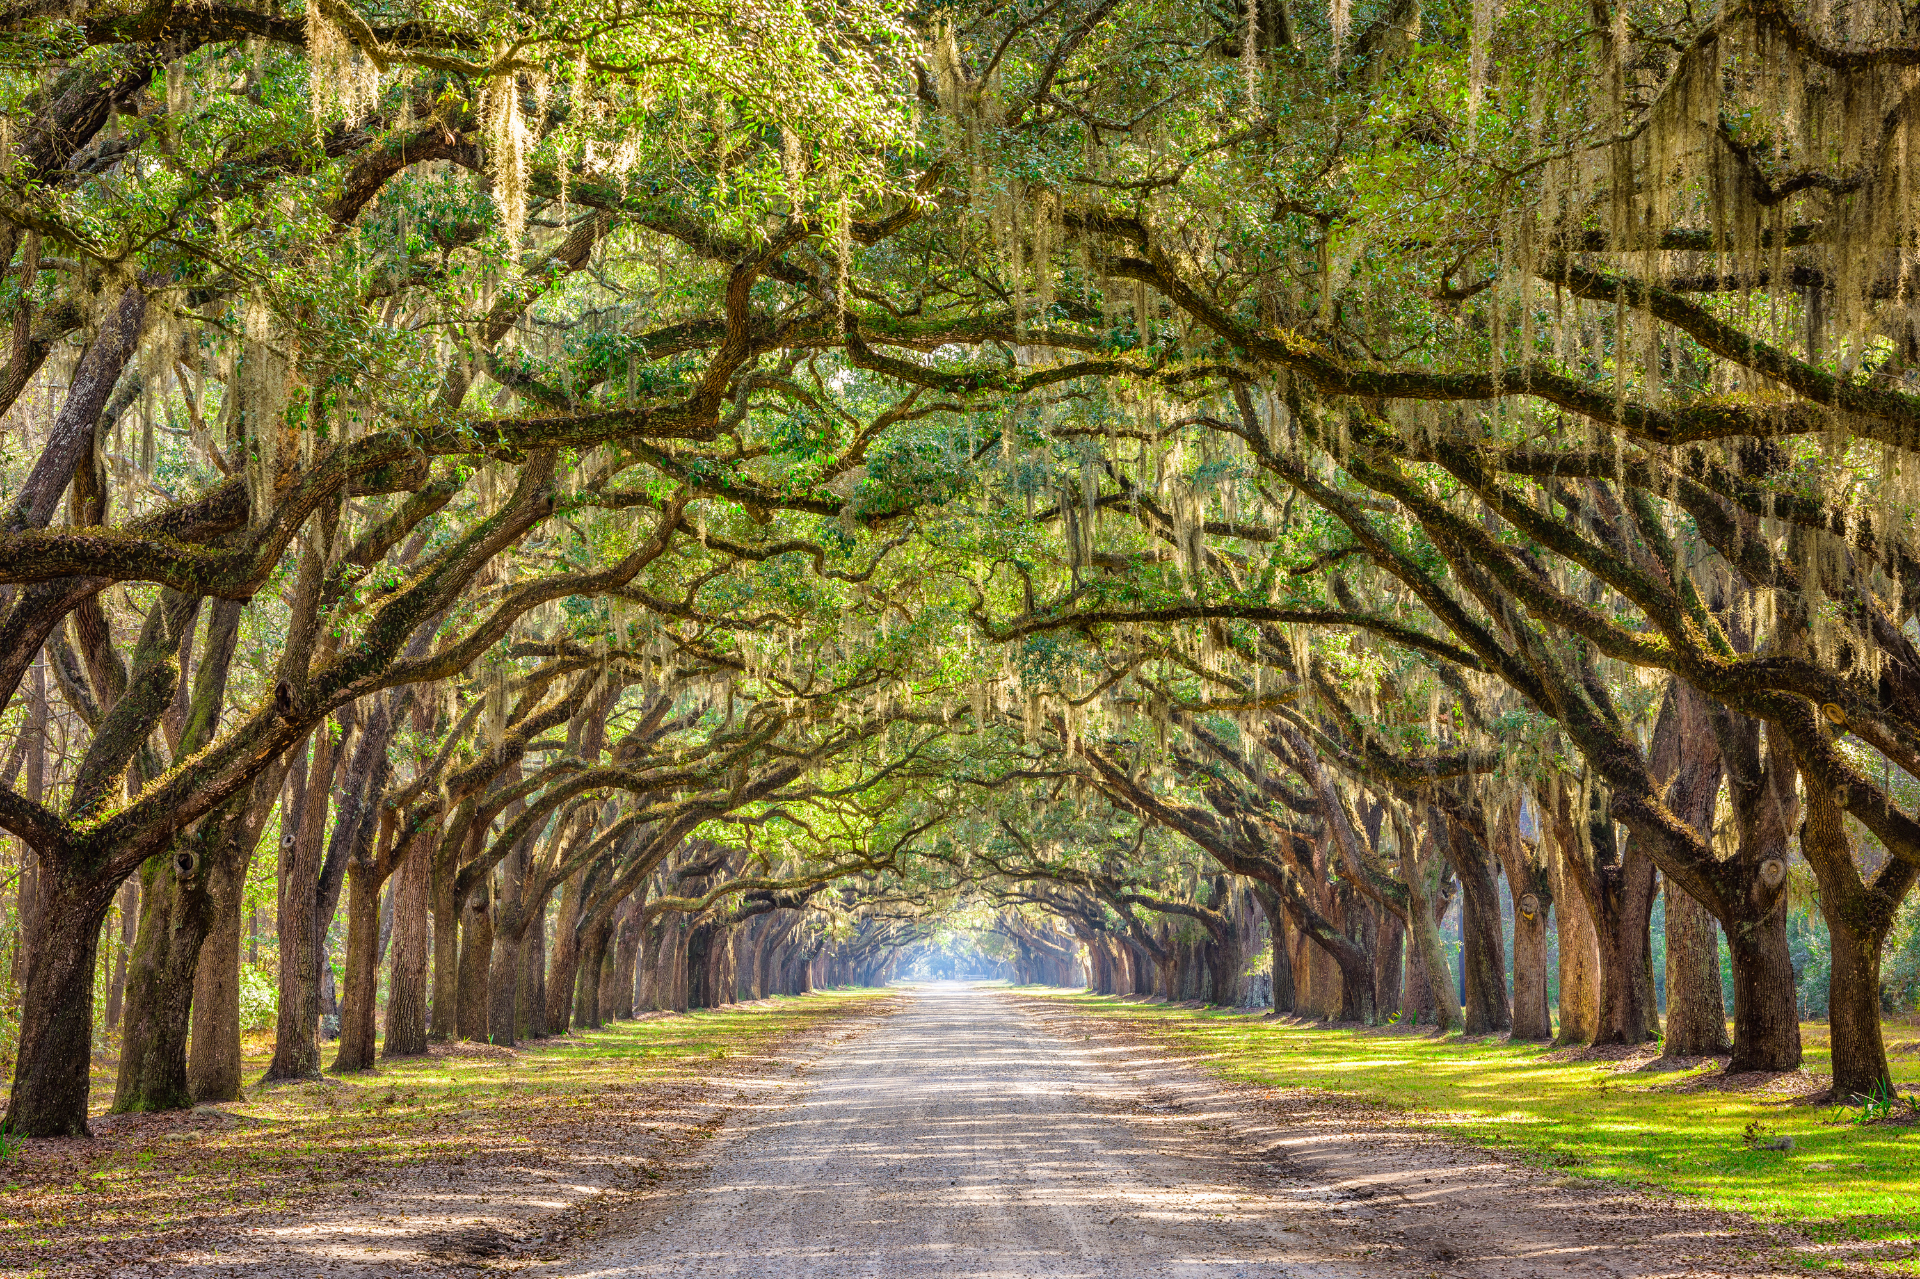 Spanish Moss Lined Road in Savannah, Georgia